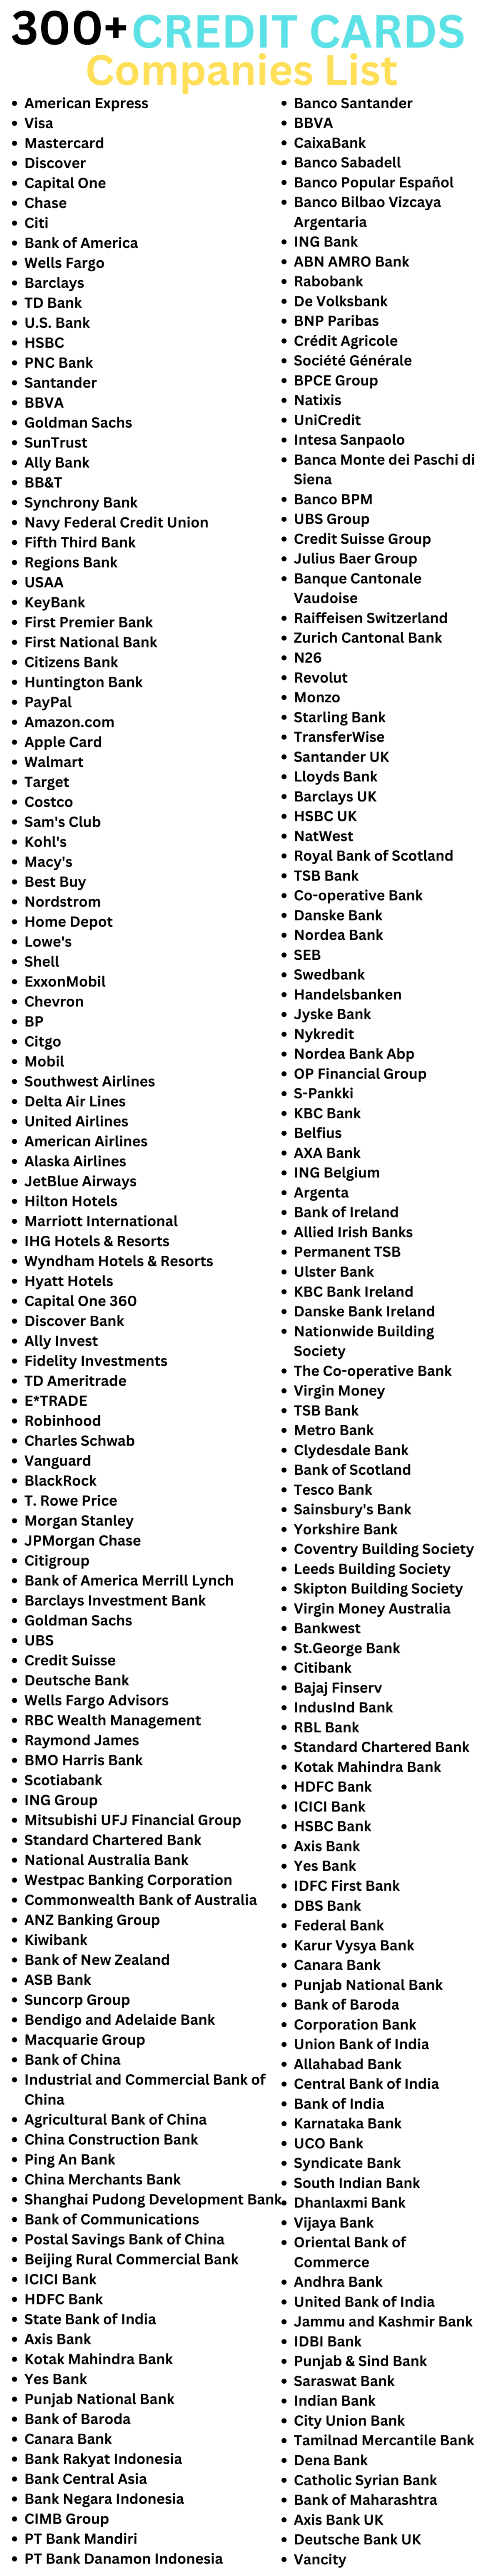 Credit cards companies list